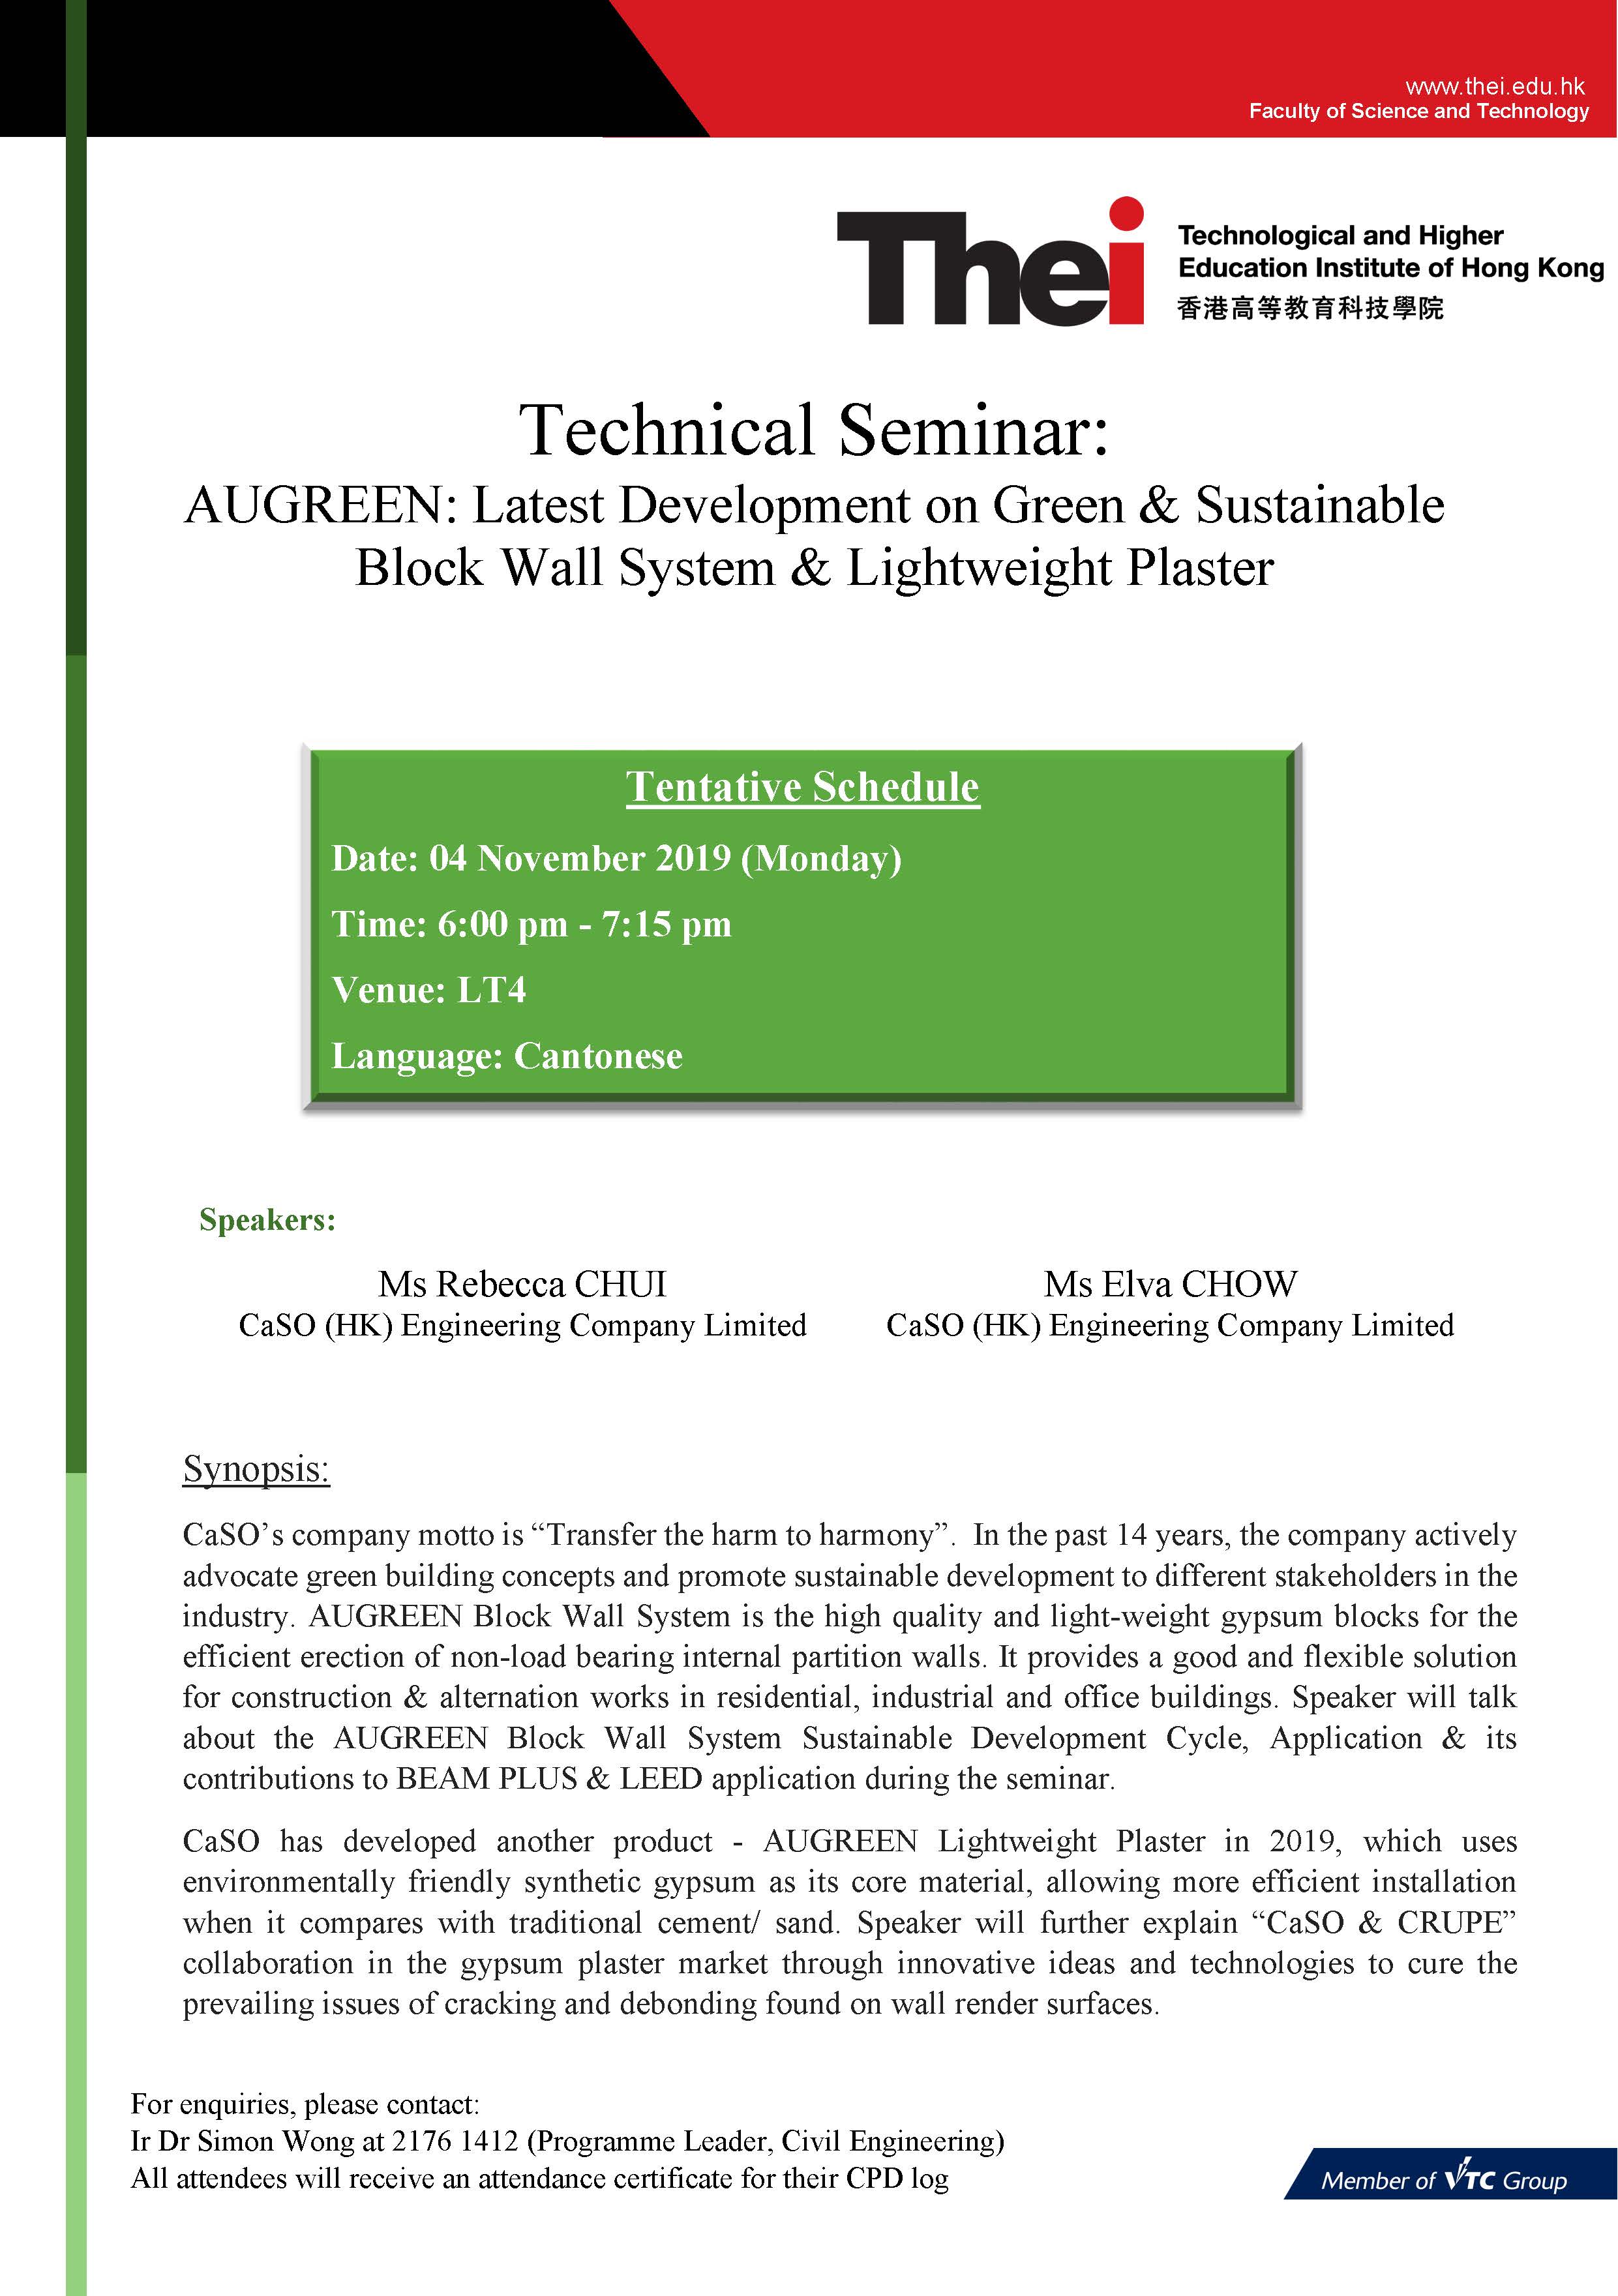 Technical Seminar: AUGREEN: Latest Development on Green & Sustainable Block Wall System & Lightweight Plaster